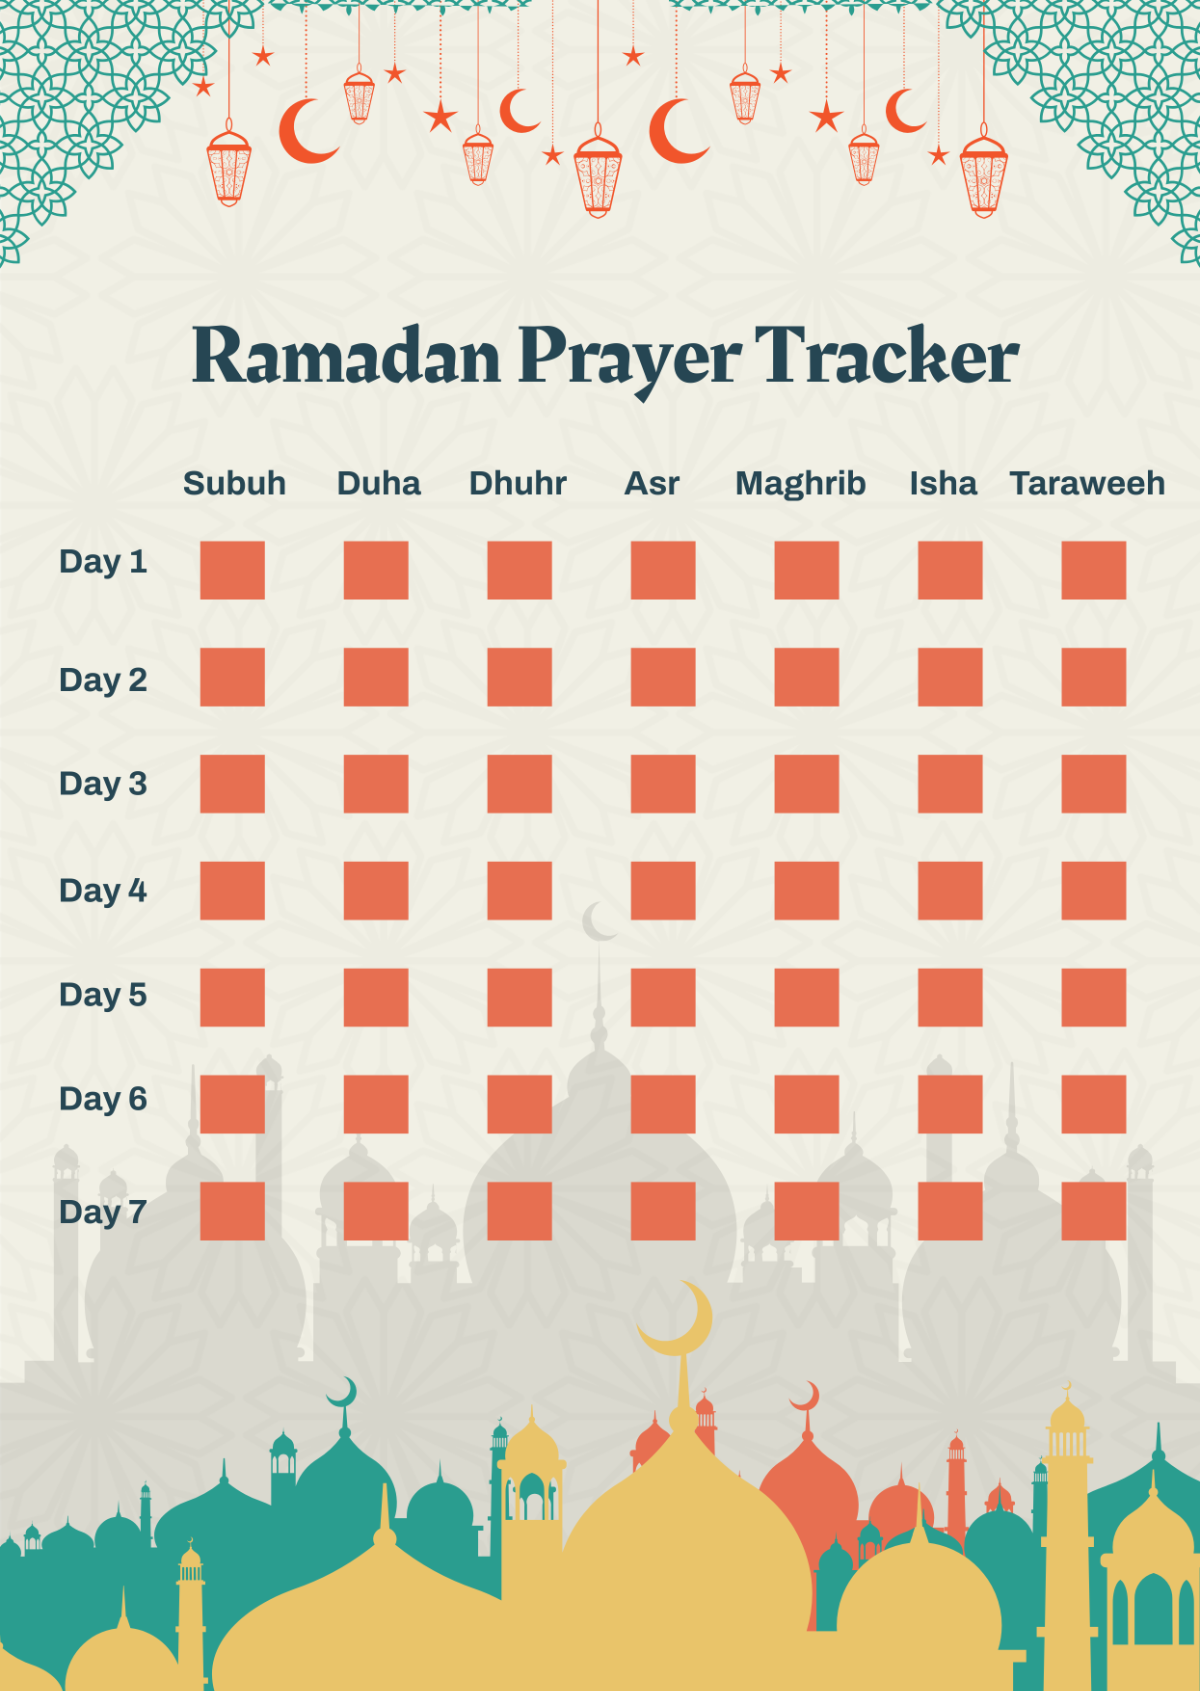 Ramadan Prayer Tracker Template